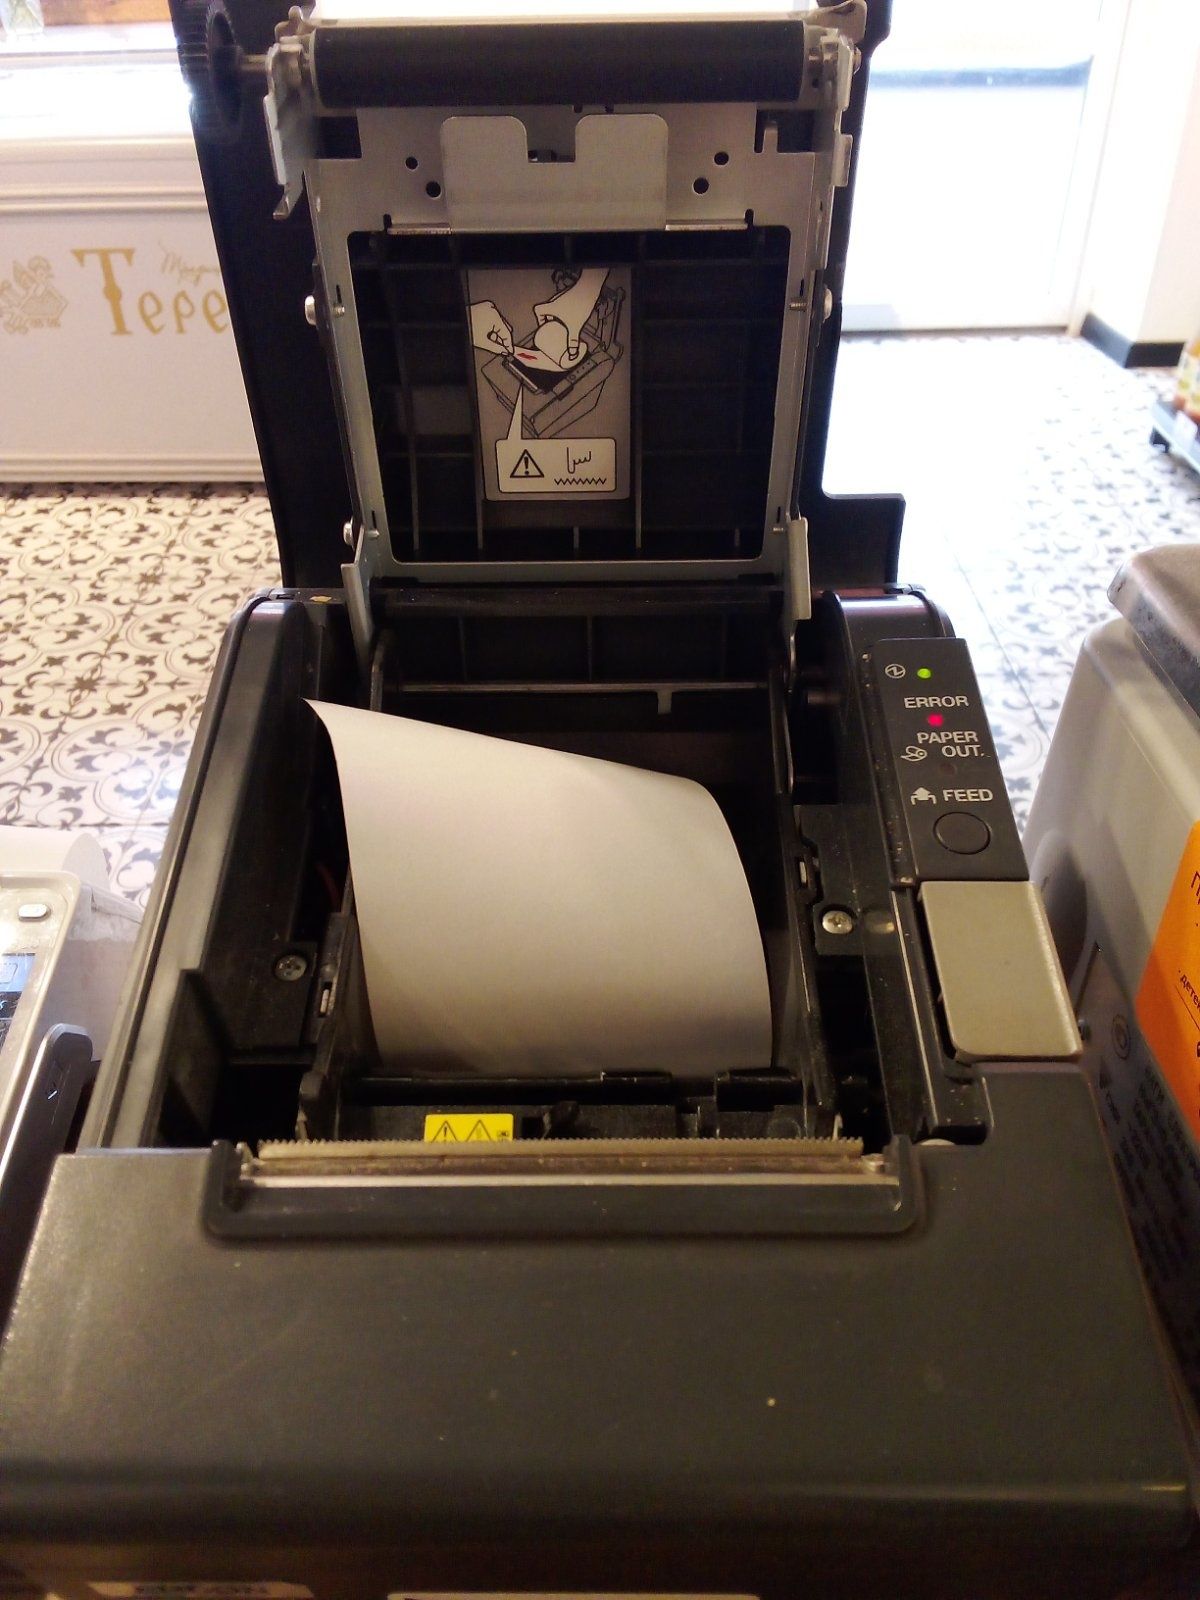 Принтер чеків Epson TM-T88V